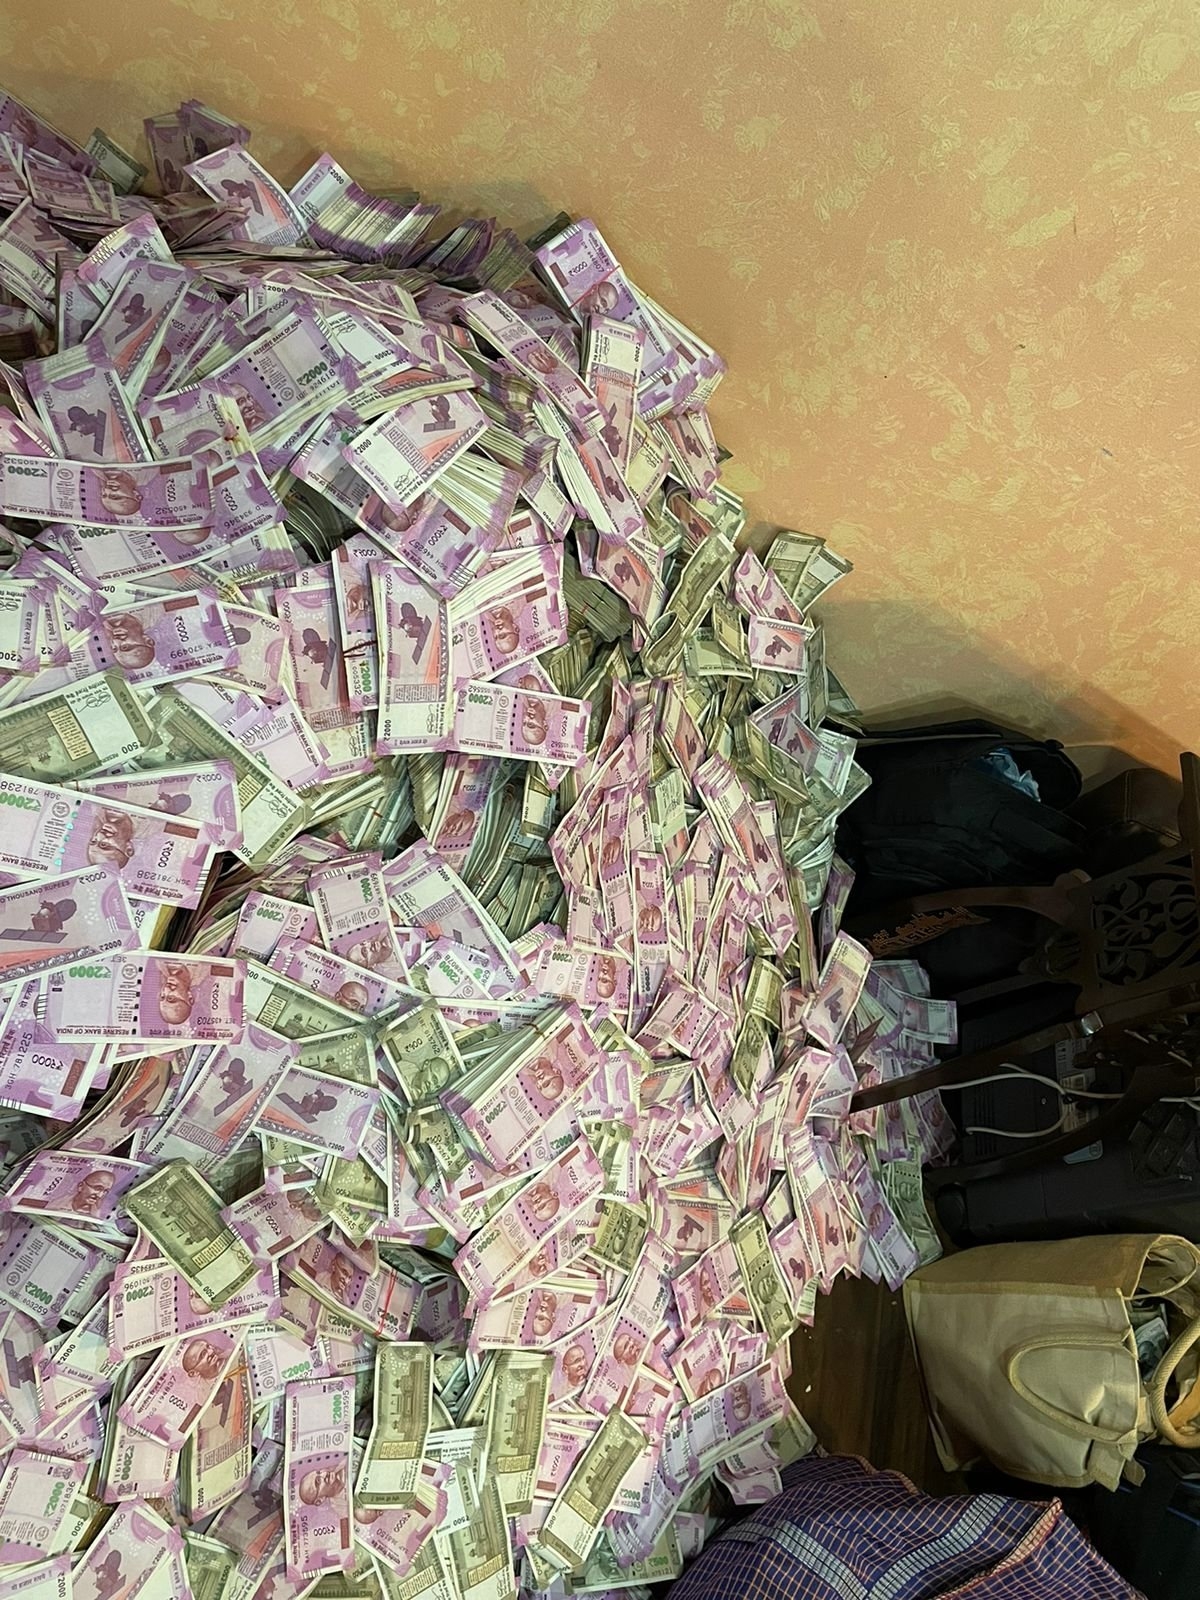 ED seized 20 crores